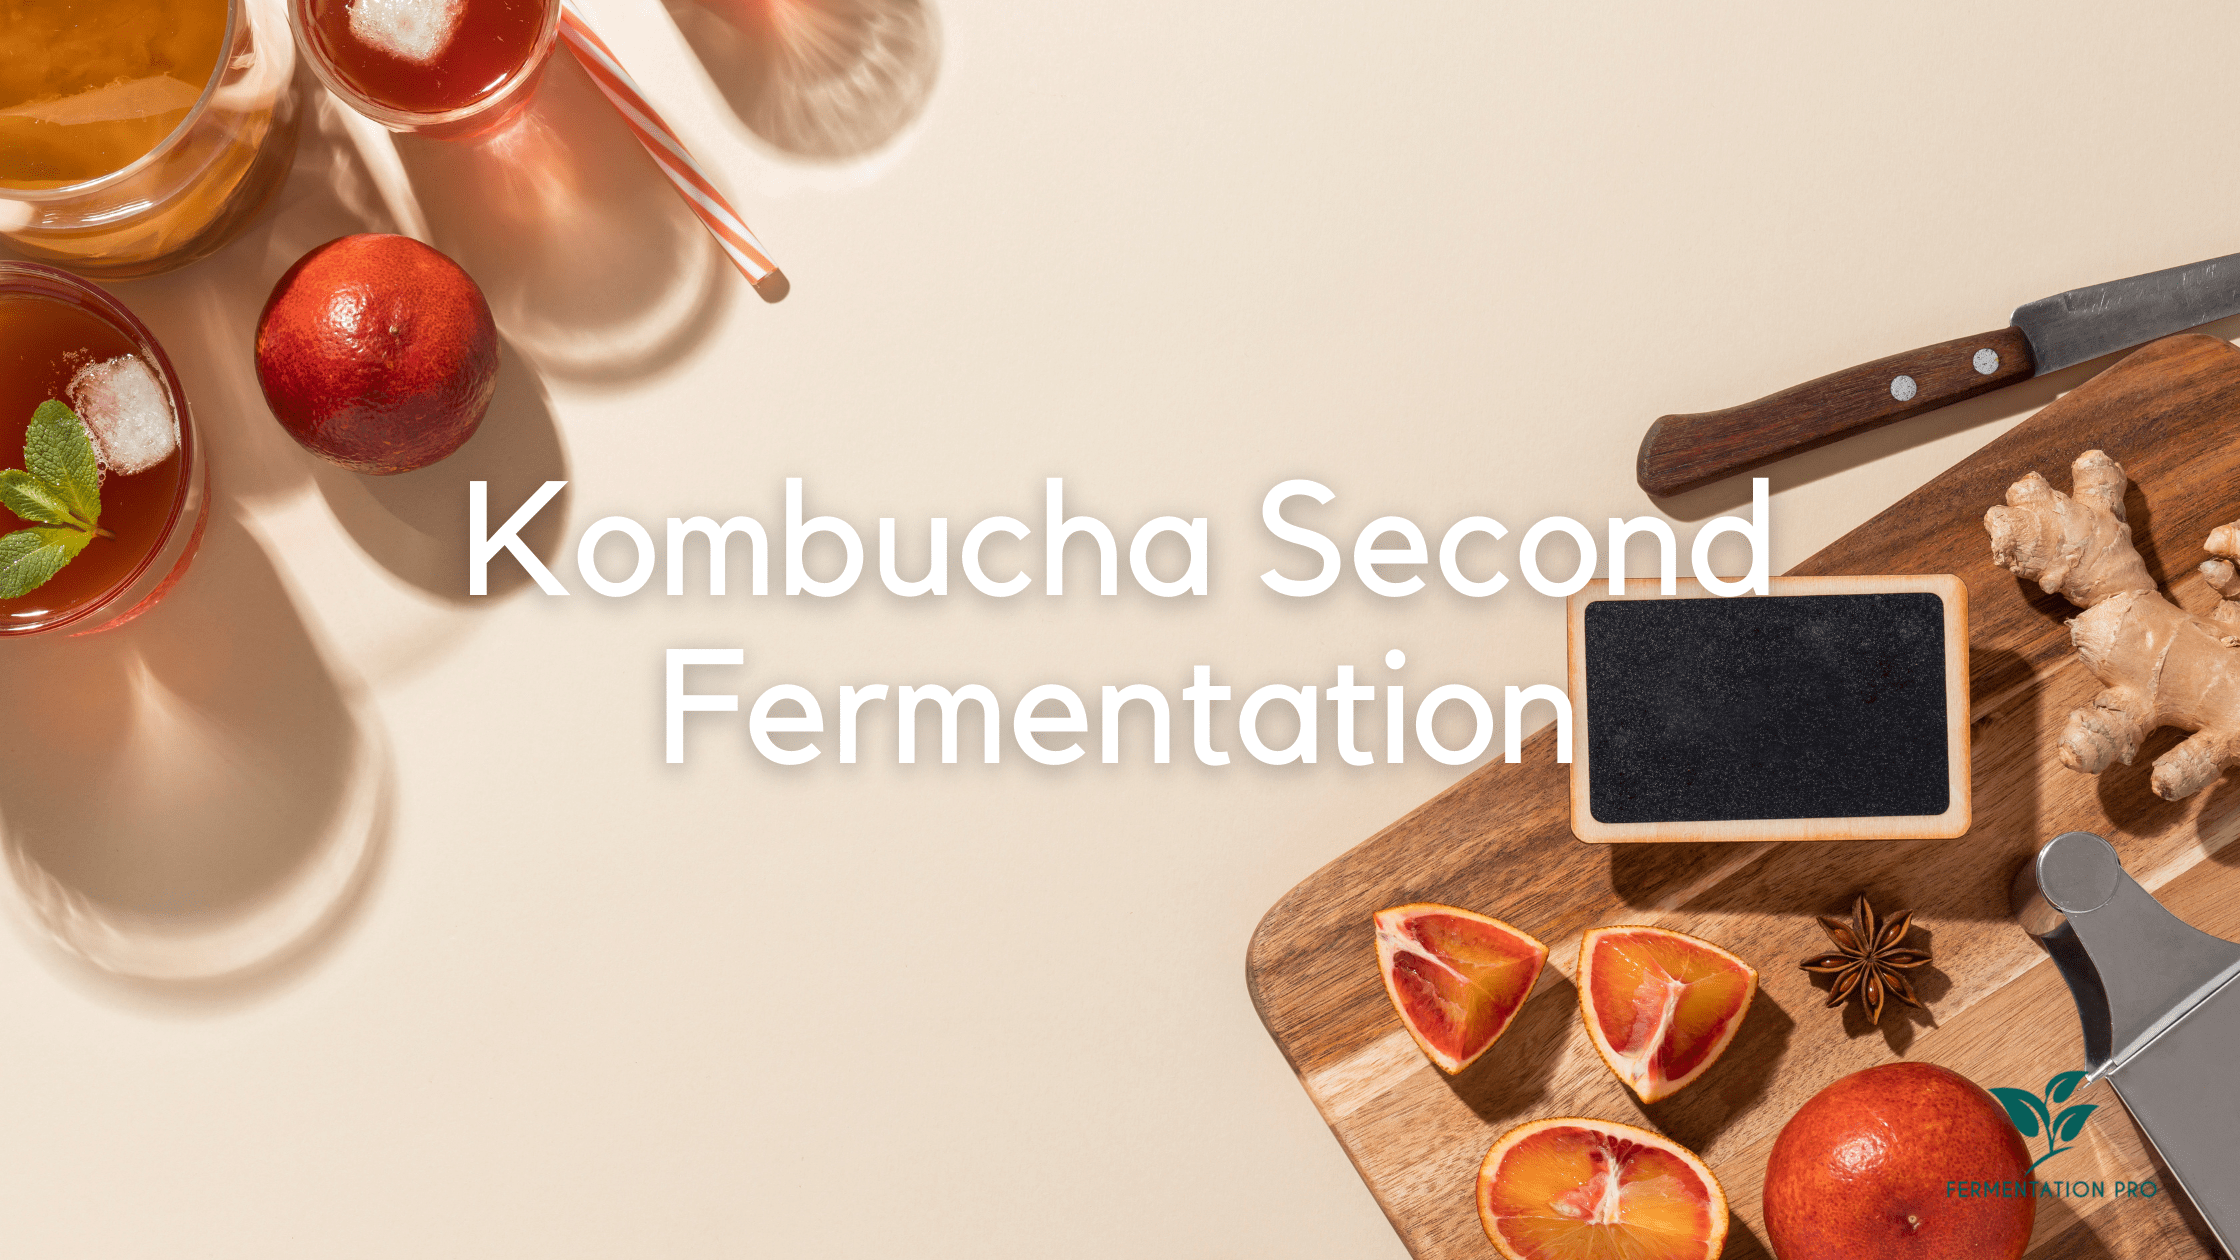 Mintale Xxx - Kombucha Second Fermentation - Fermentation Pro